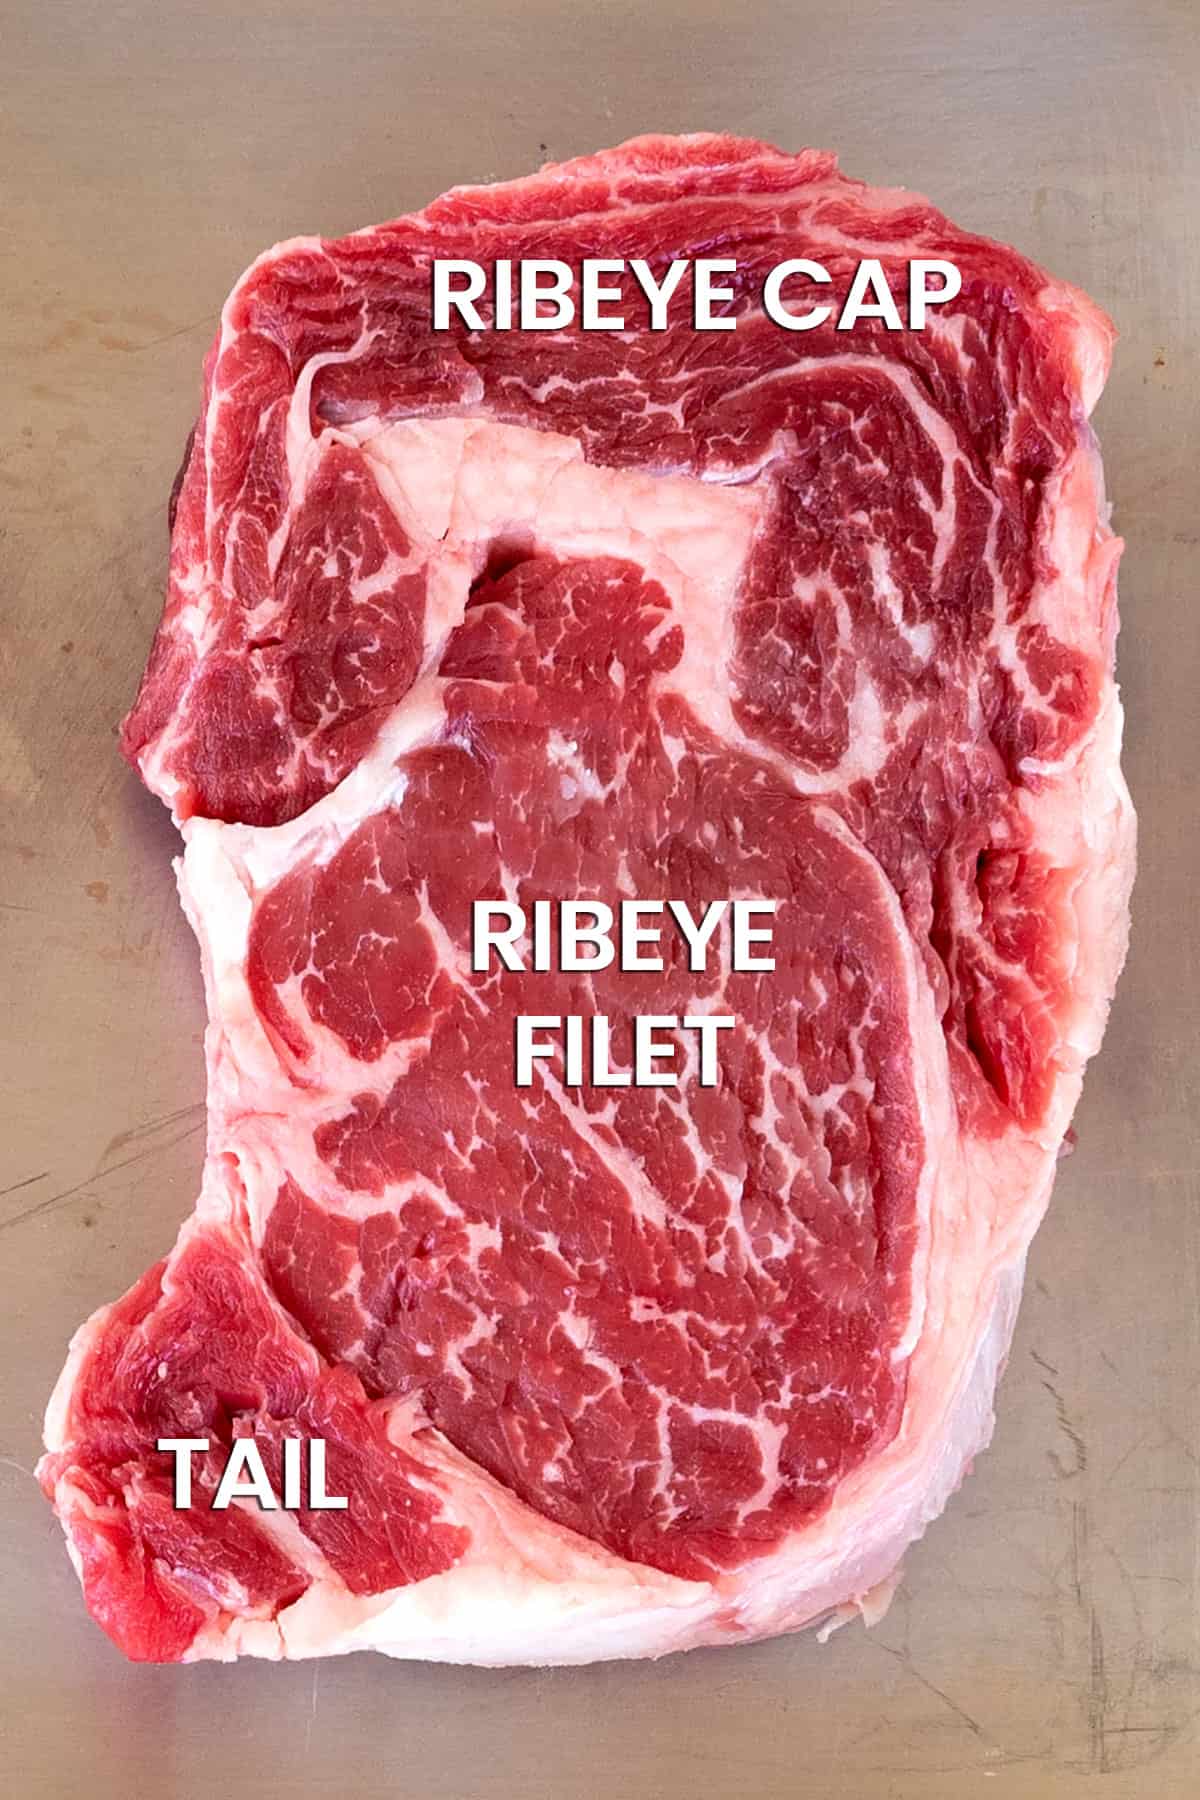 parts of a ribeye: cap, filet, tail